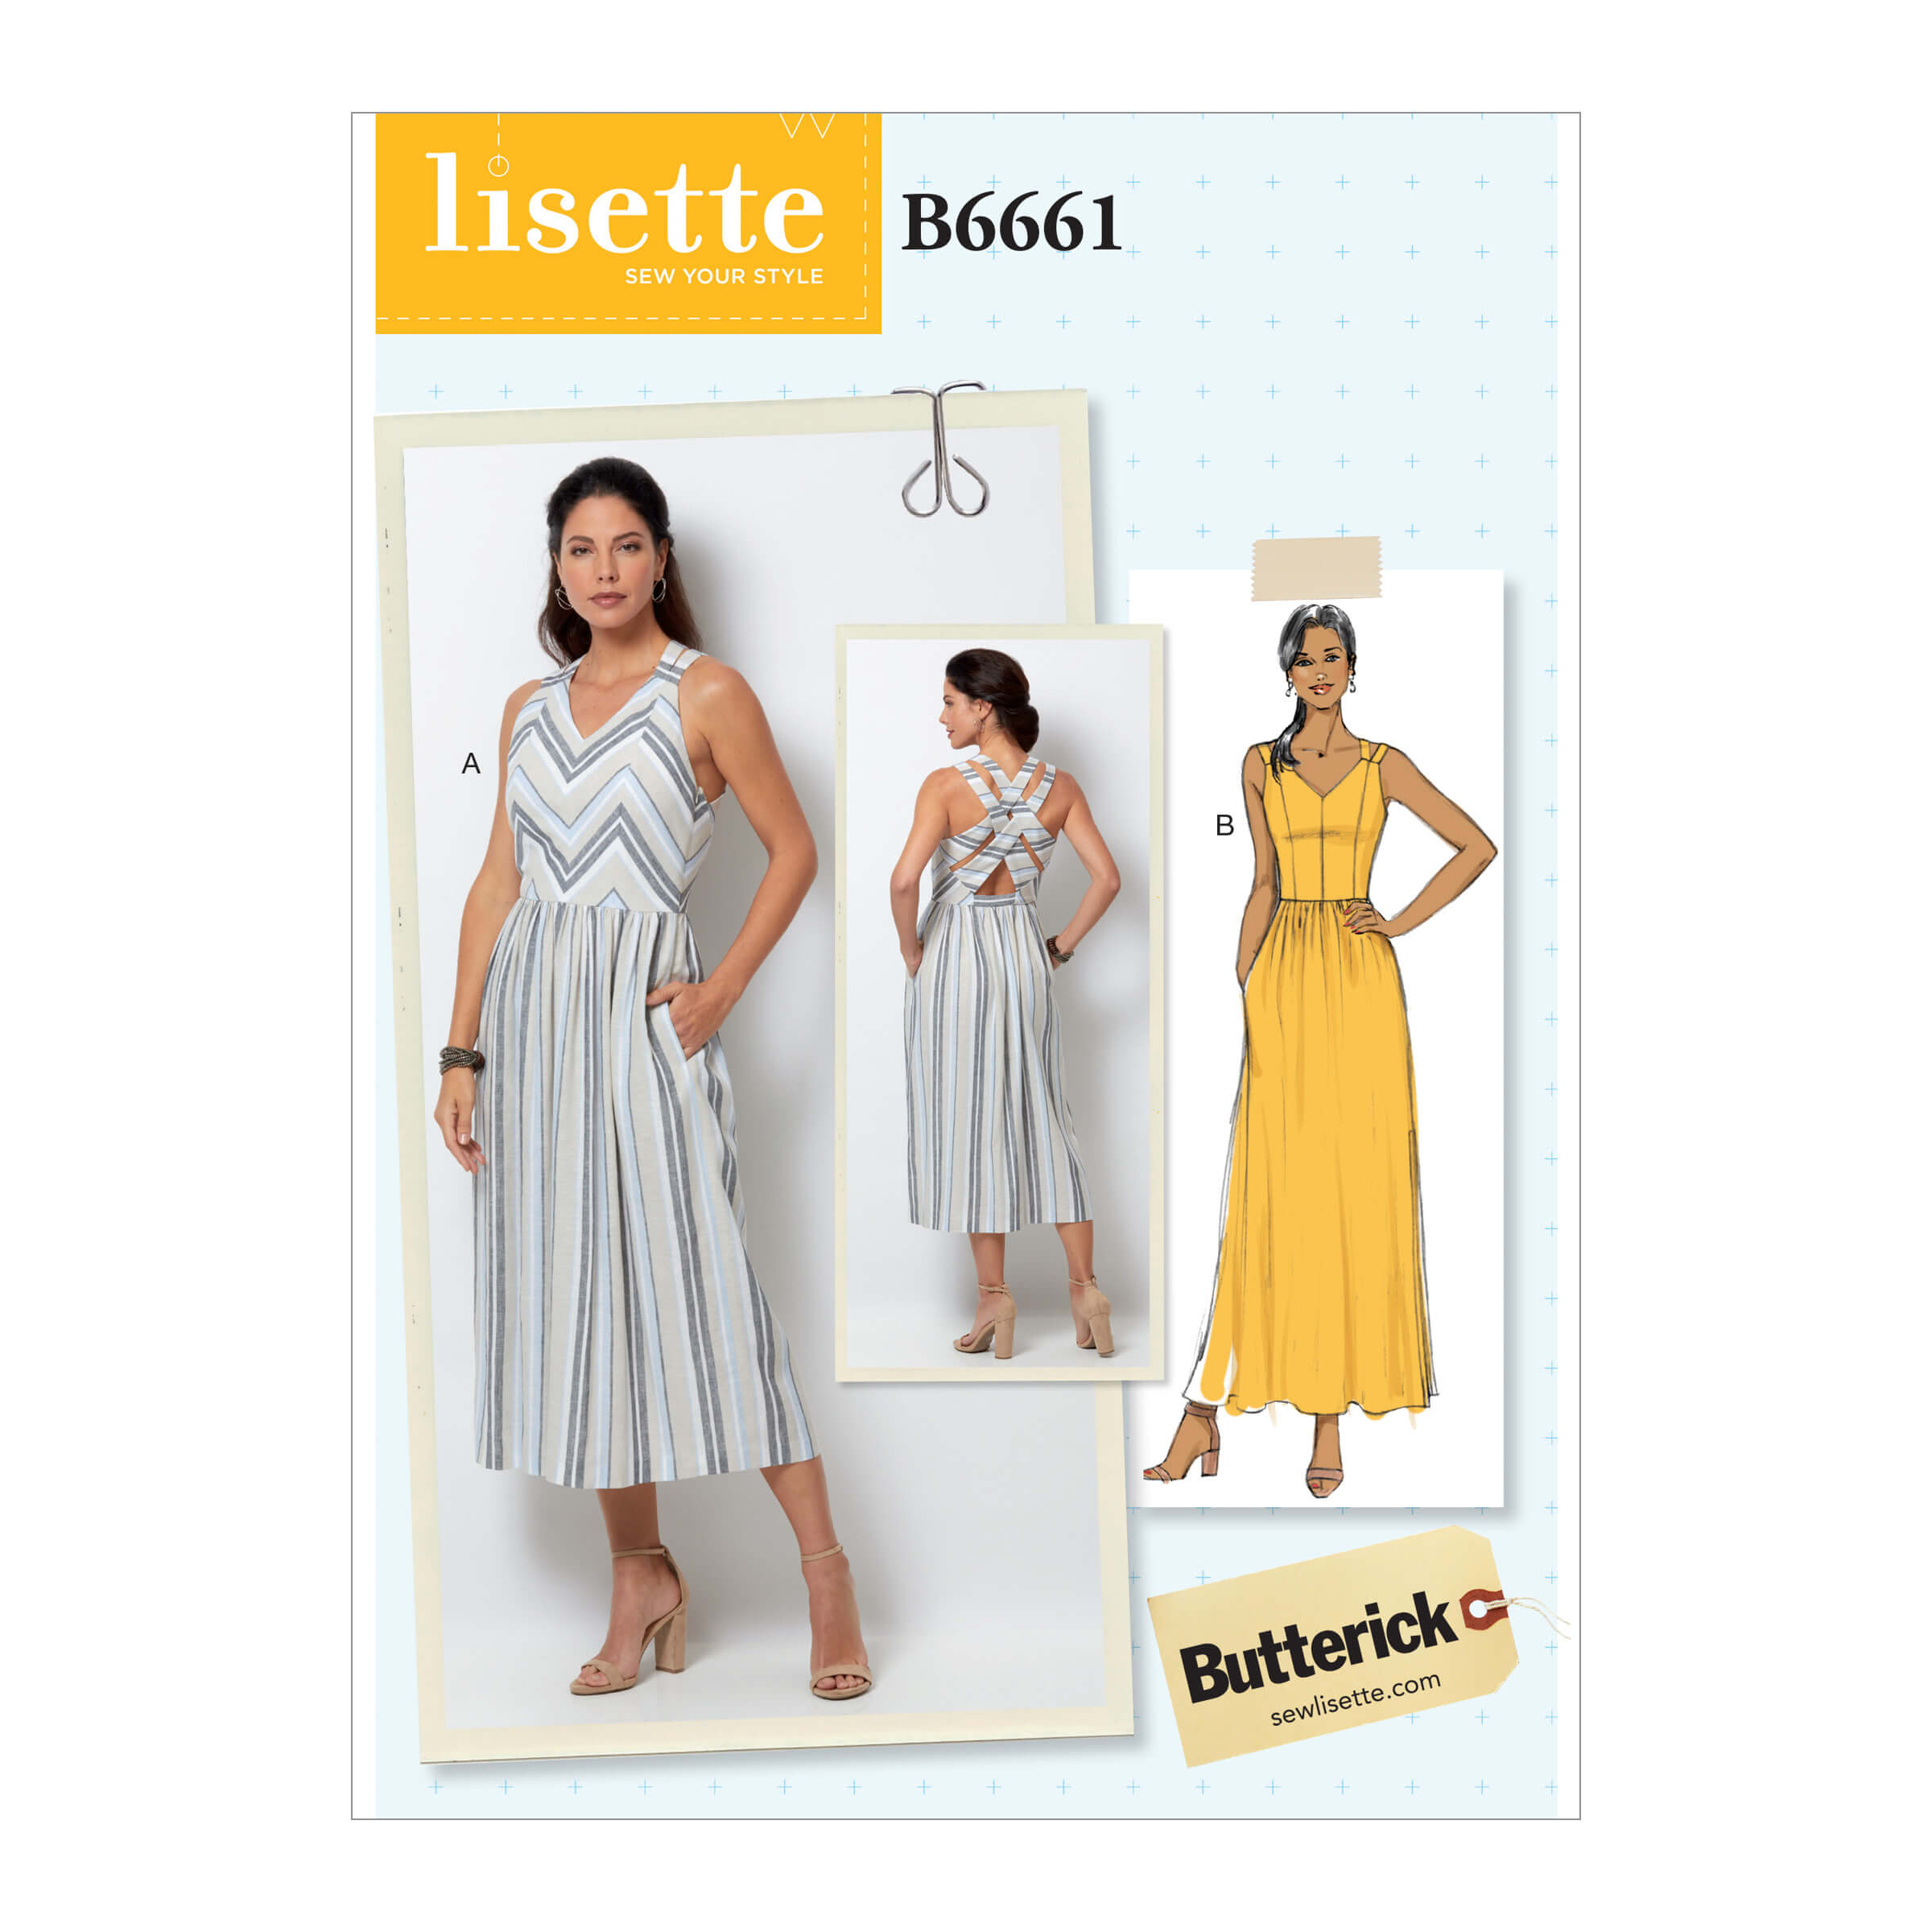 Butterick Sewing Pattern B6661 Lisette Misses' Dress